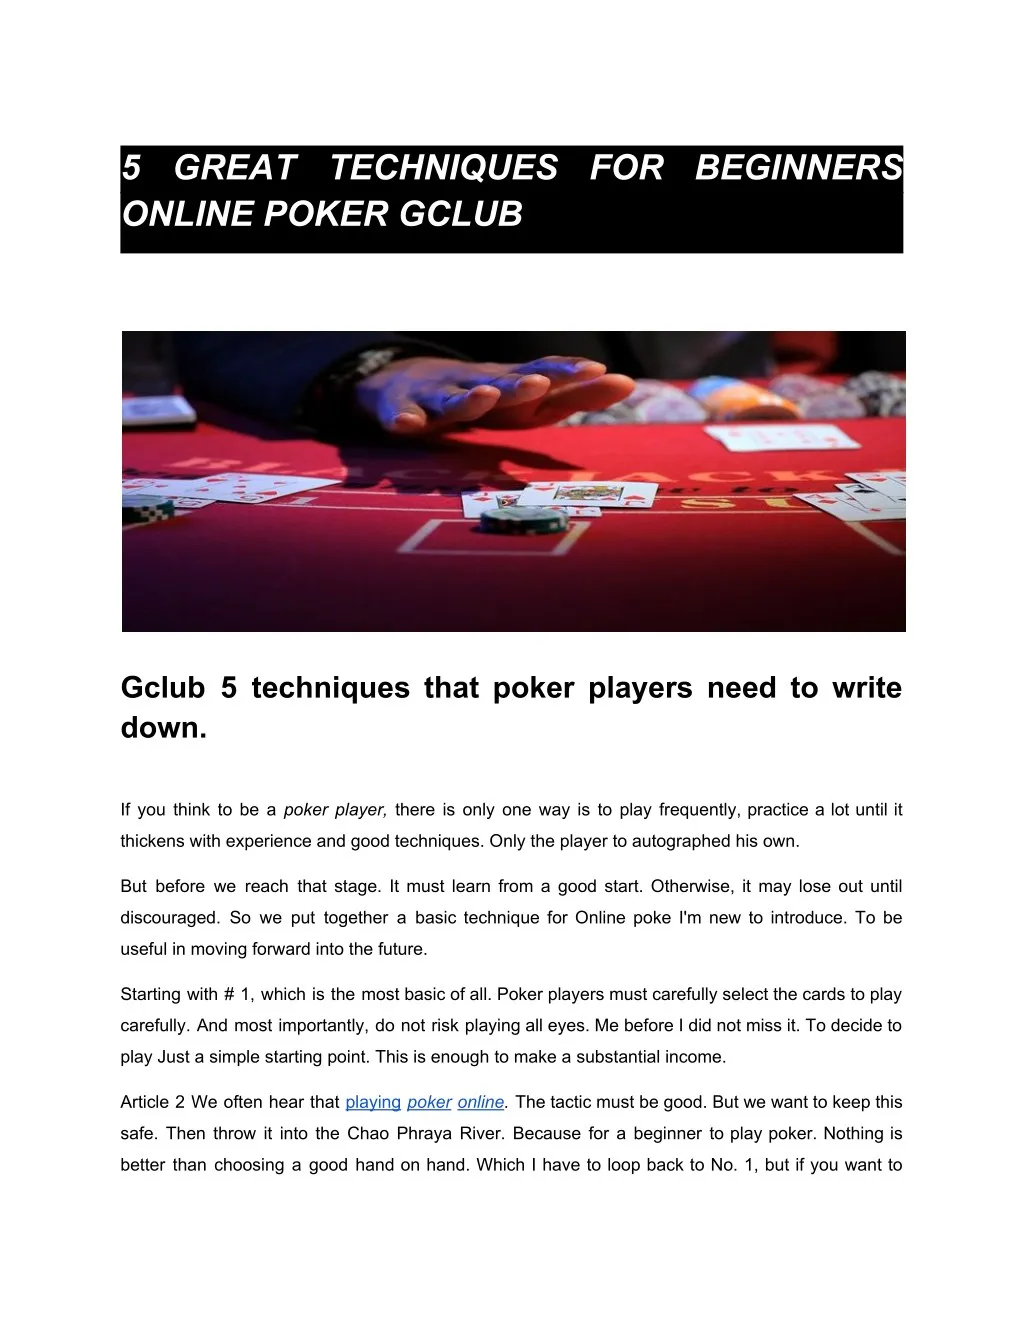 5 online poker gclub